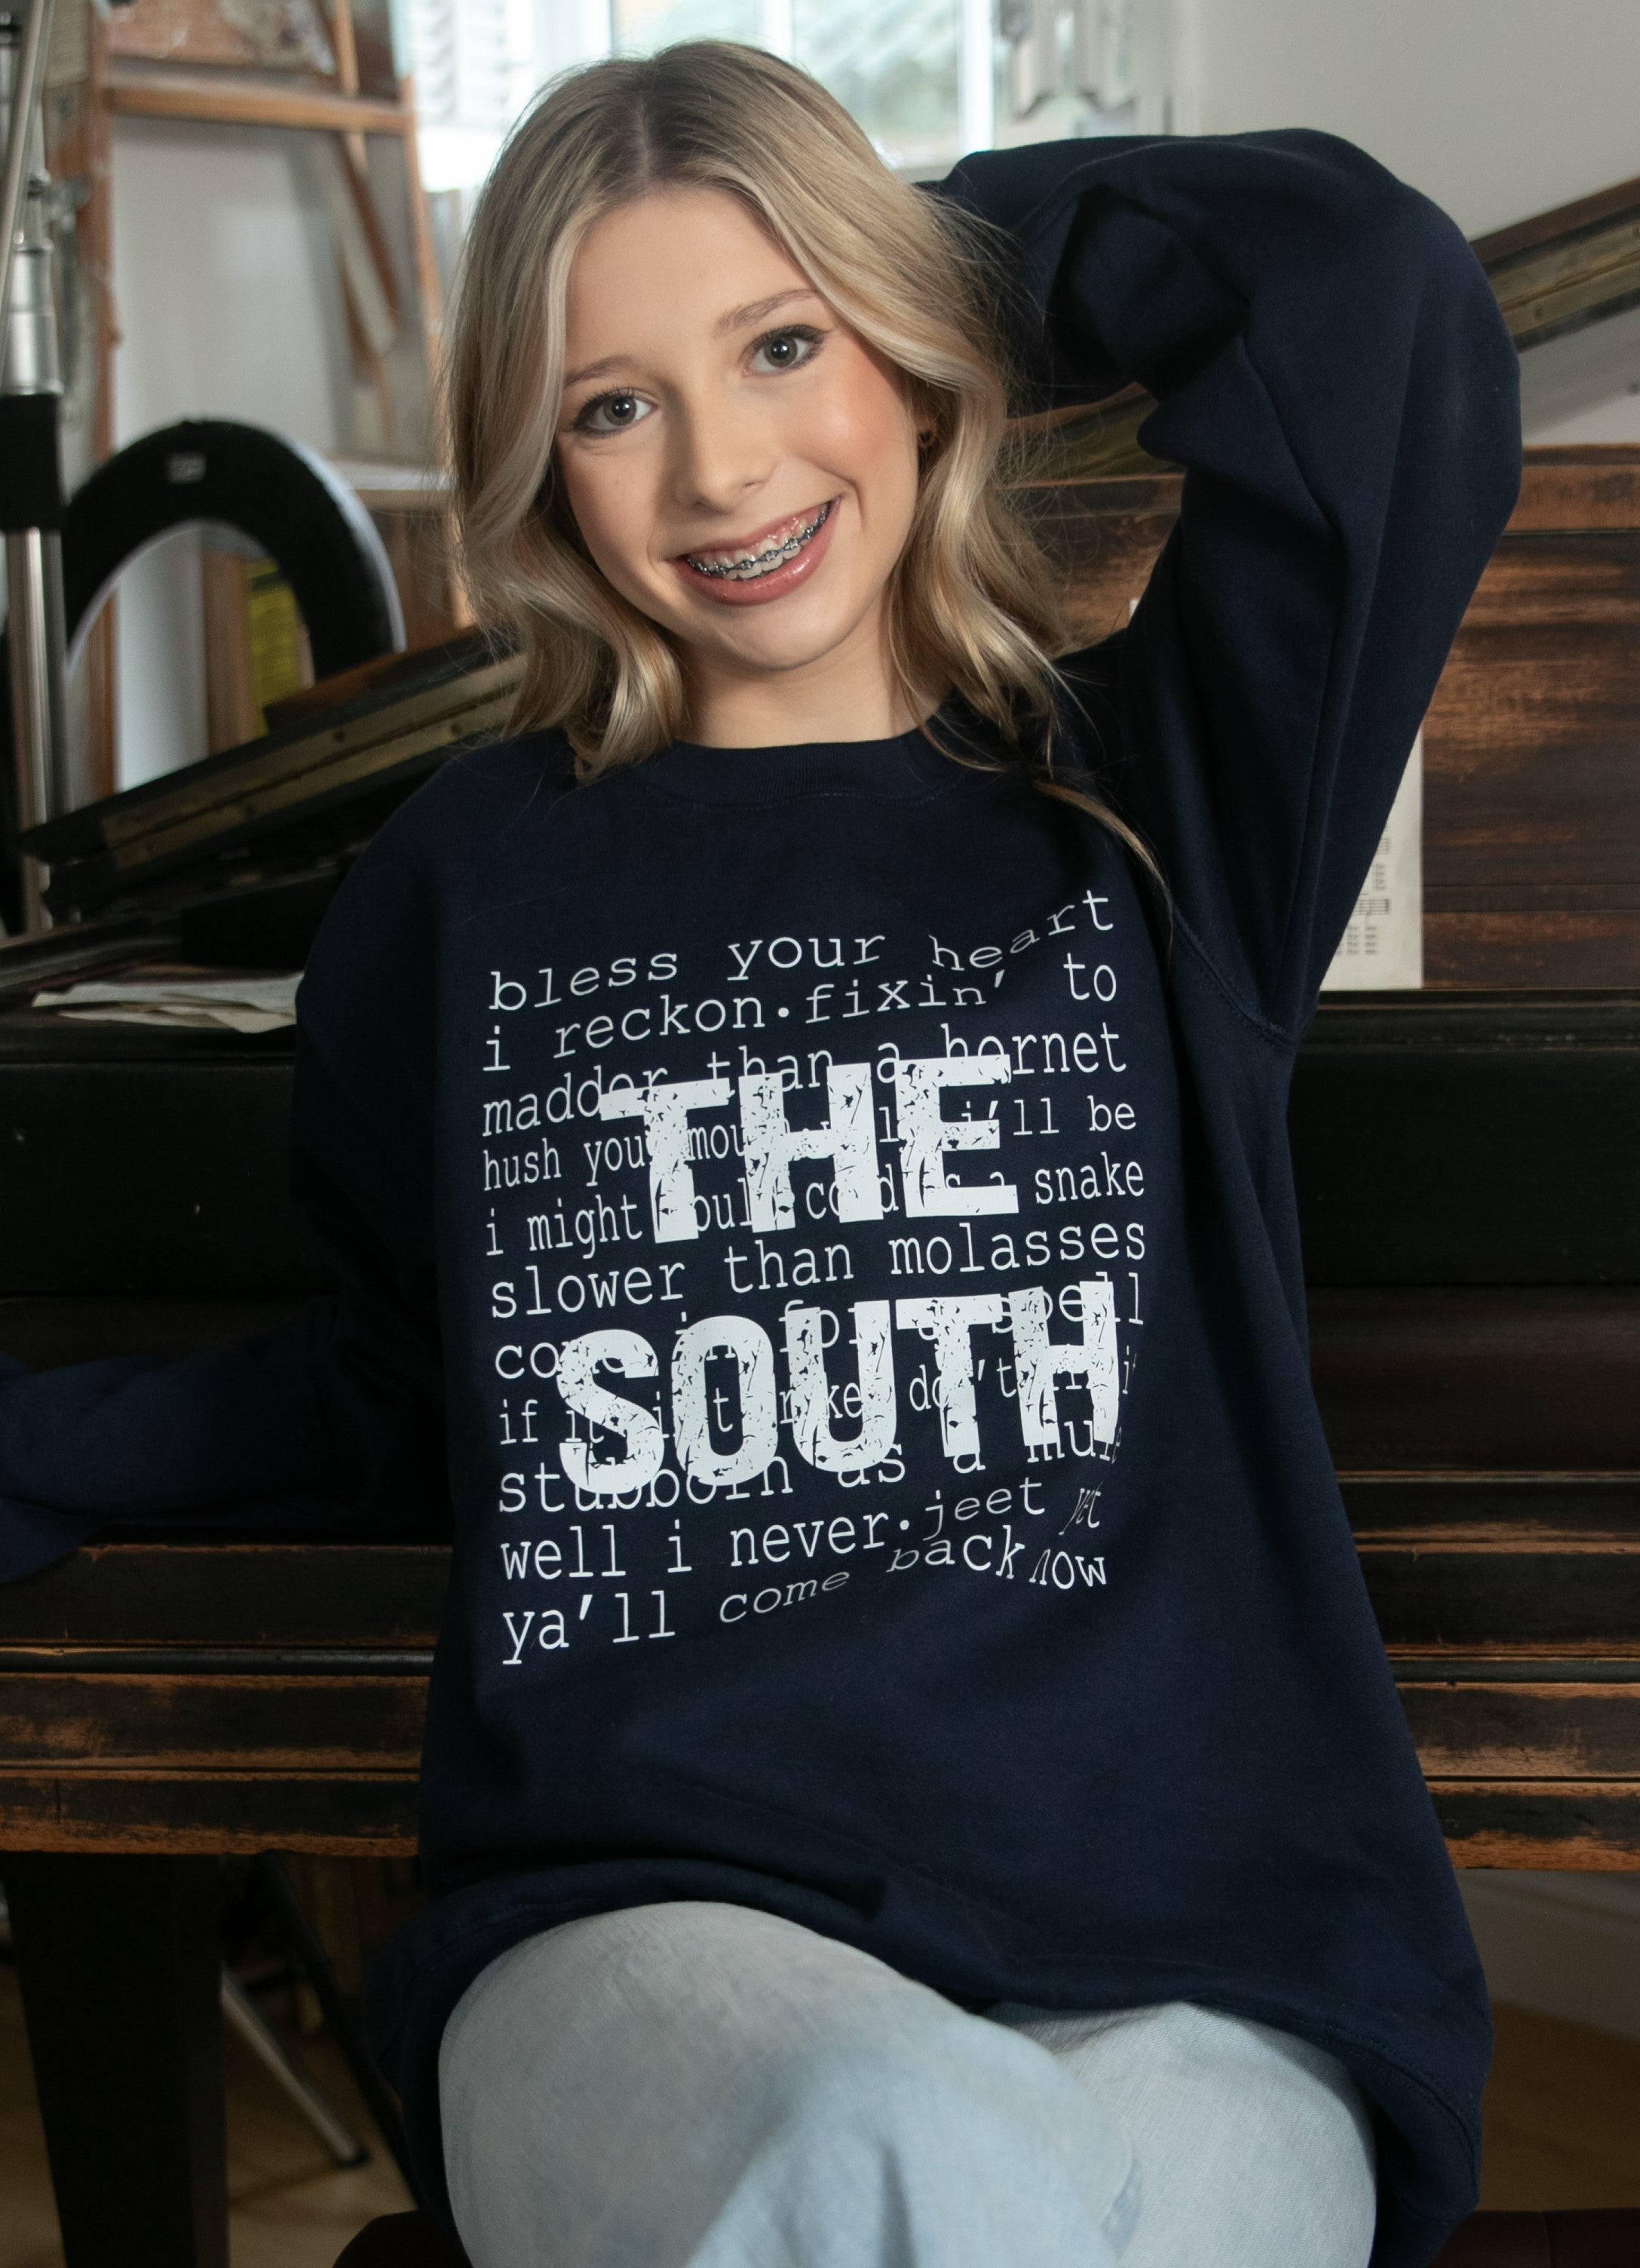 "The South" Sweatshirt